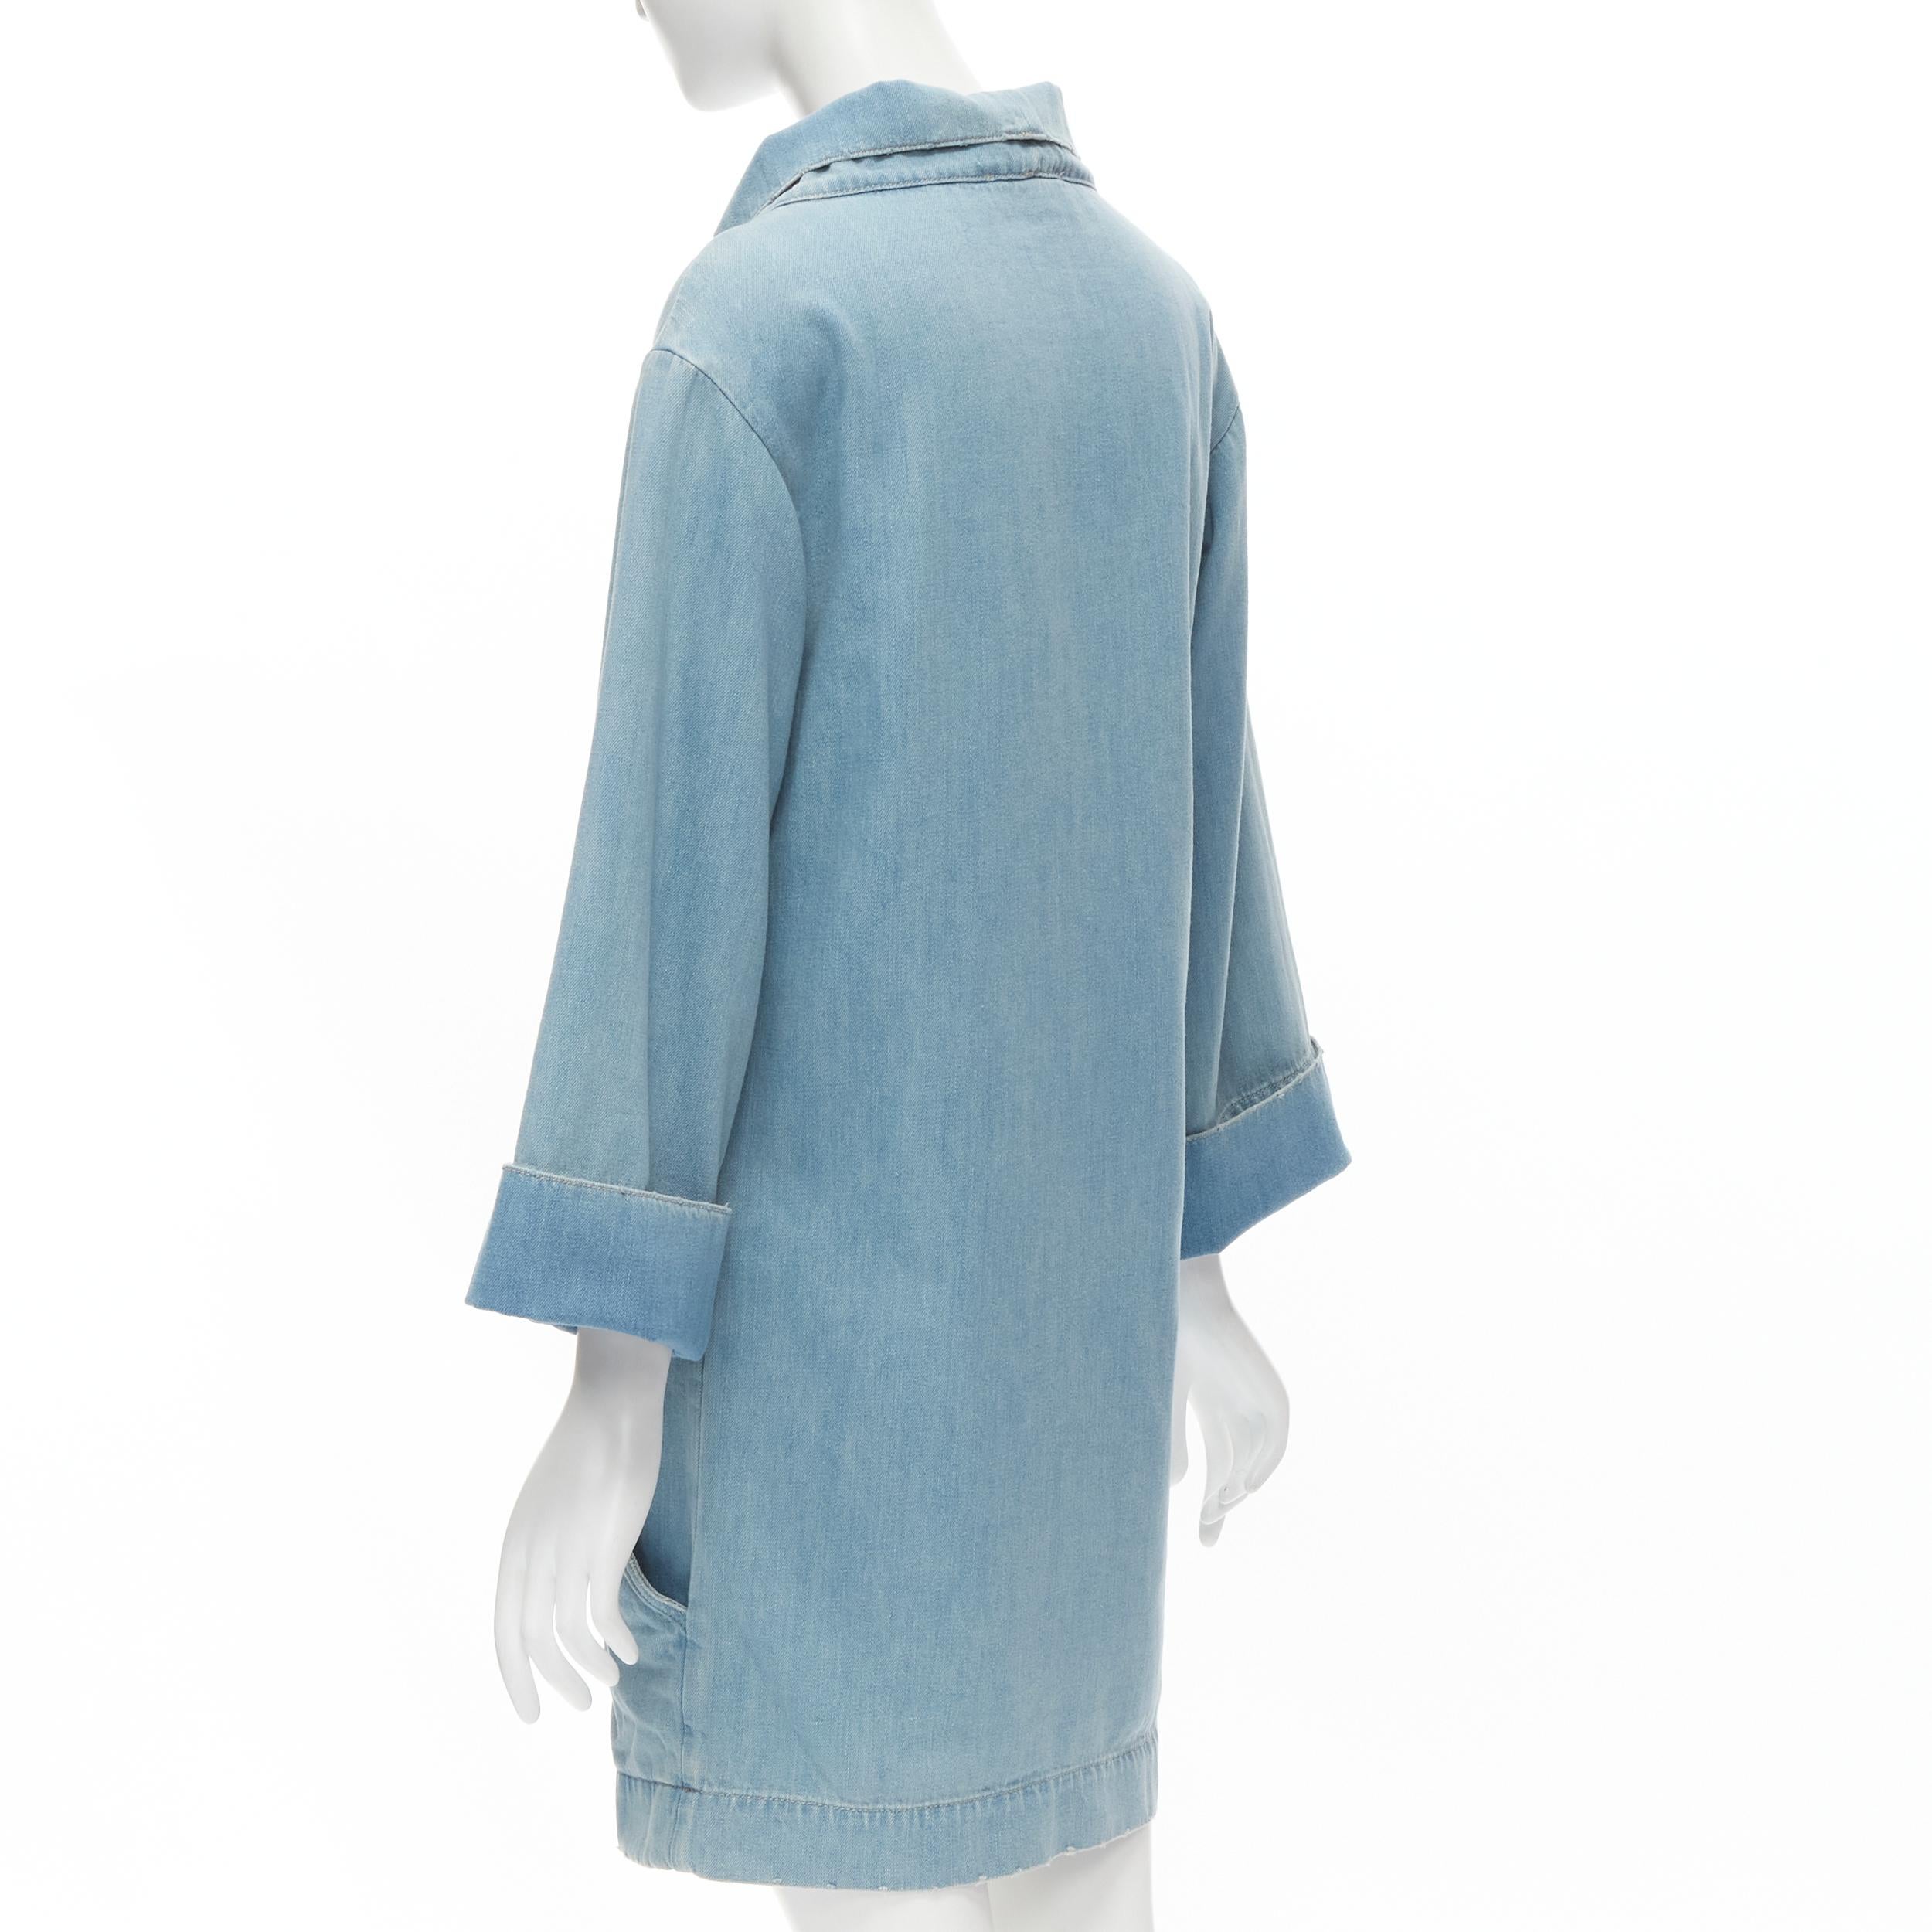 Women's CHLOE distressed washed blue denim stand collar cuffed sleeve boxy dress FR34 XS